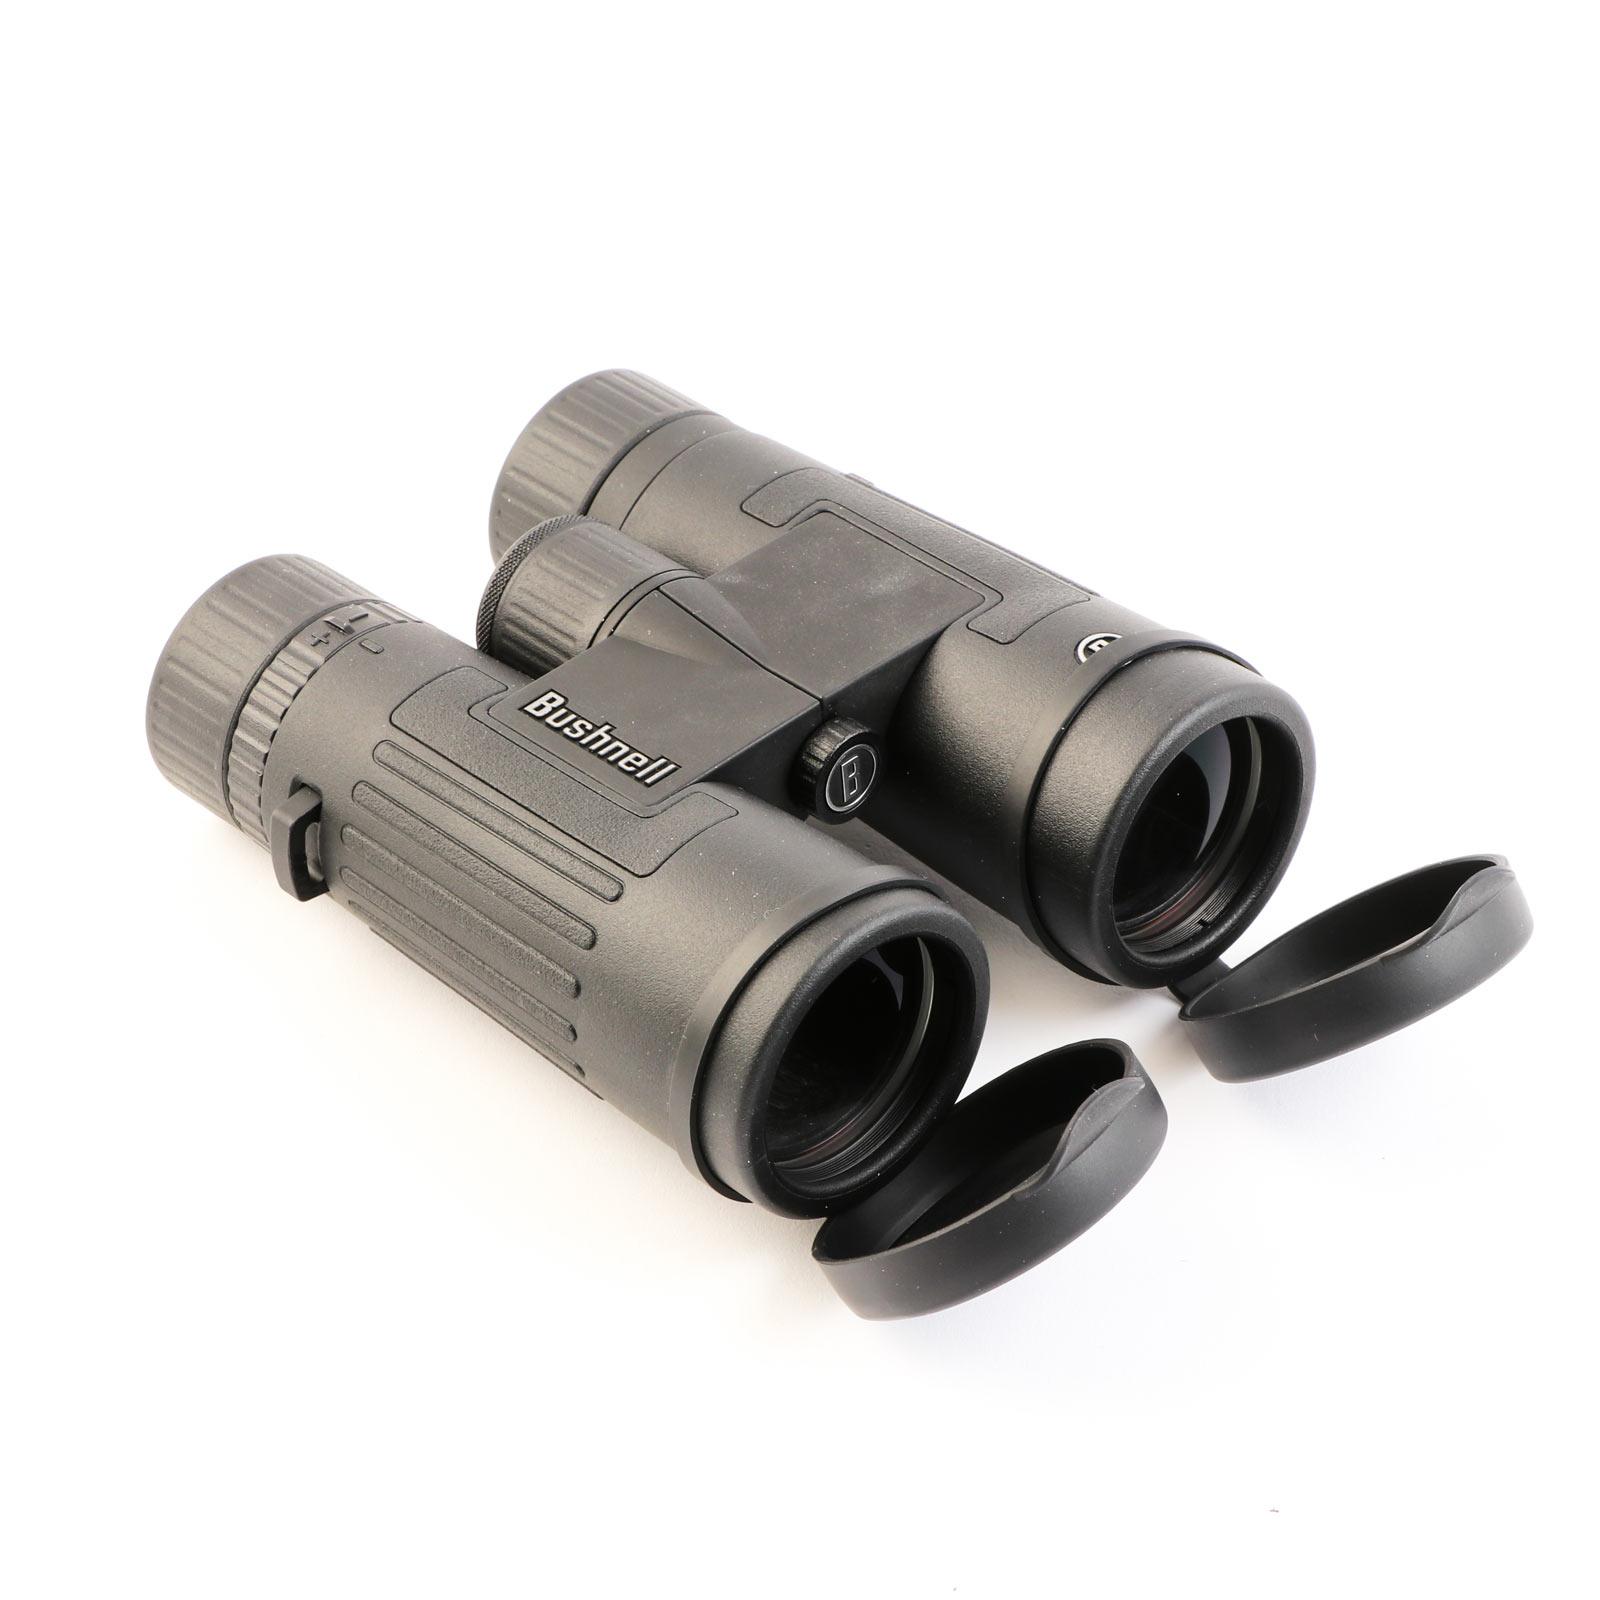 USED Bushnell Legend 8x42 Binoculars